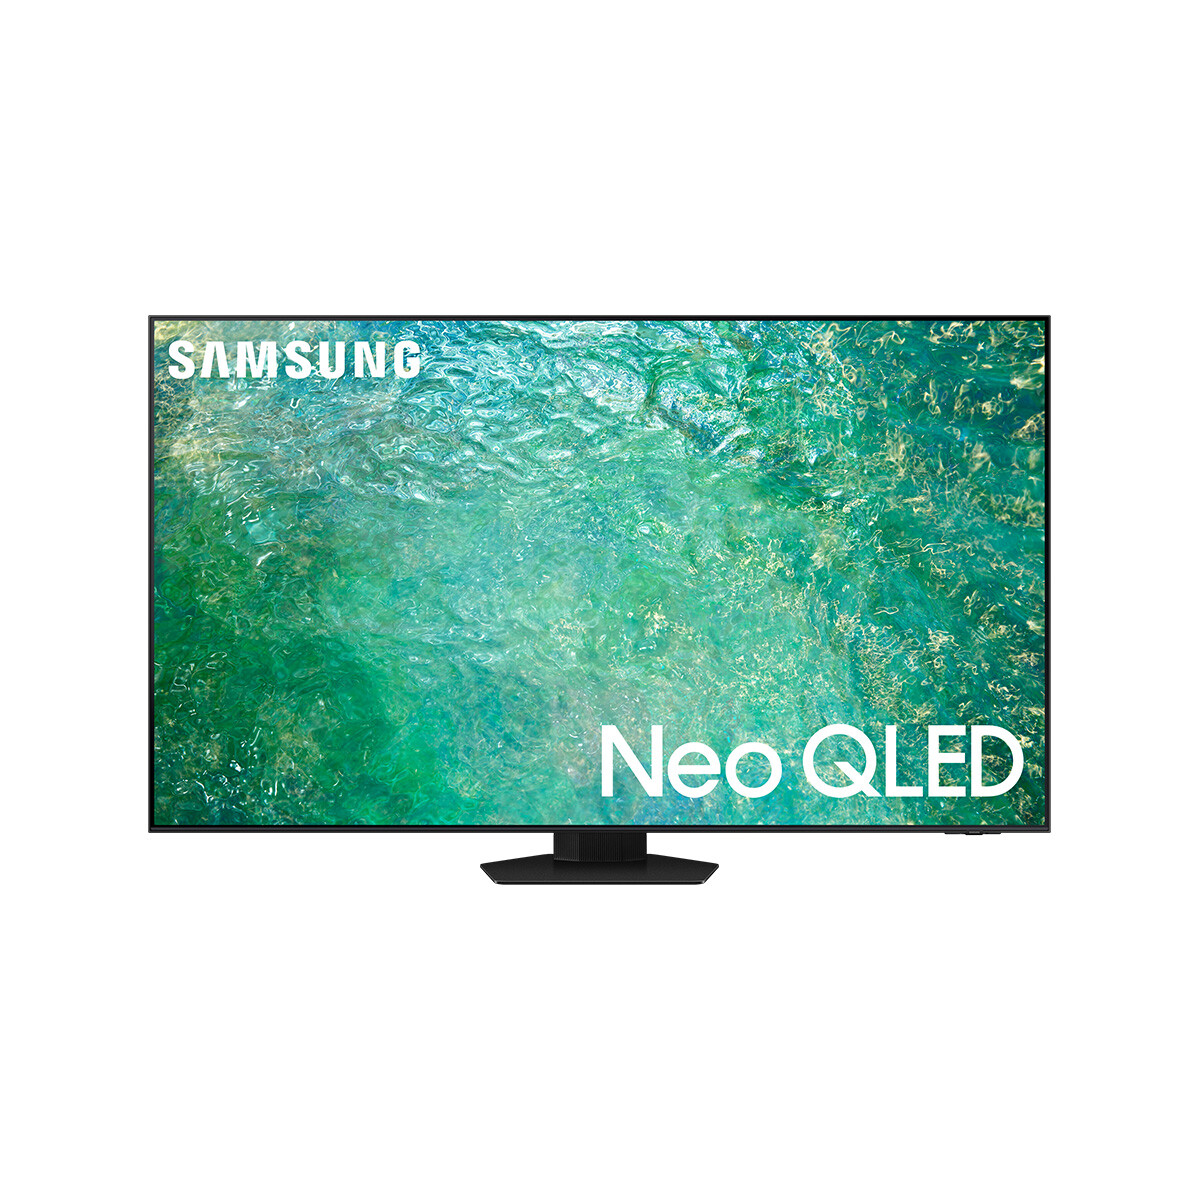 NEO QLED SMART TV 65" UHD 4K - 001 